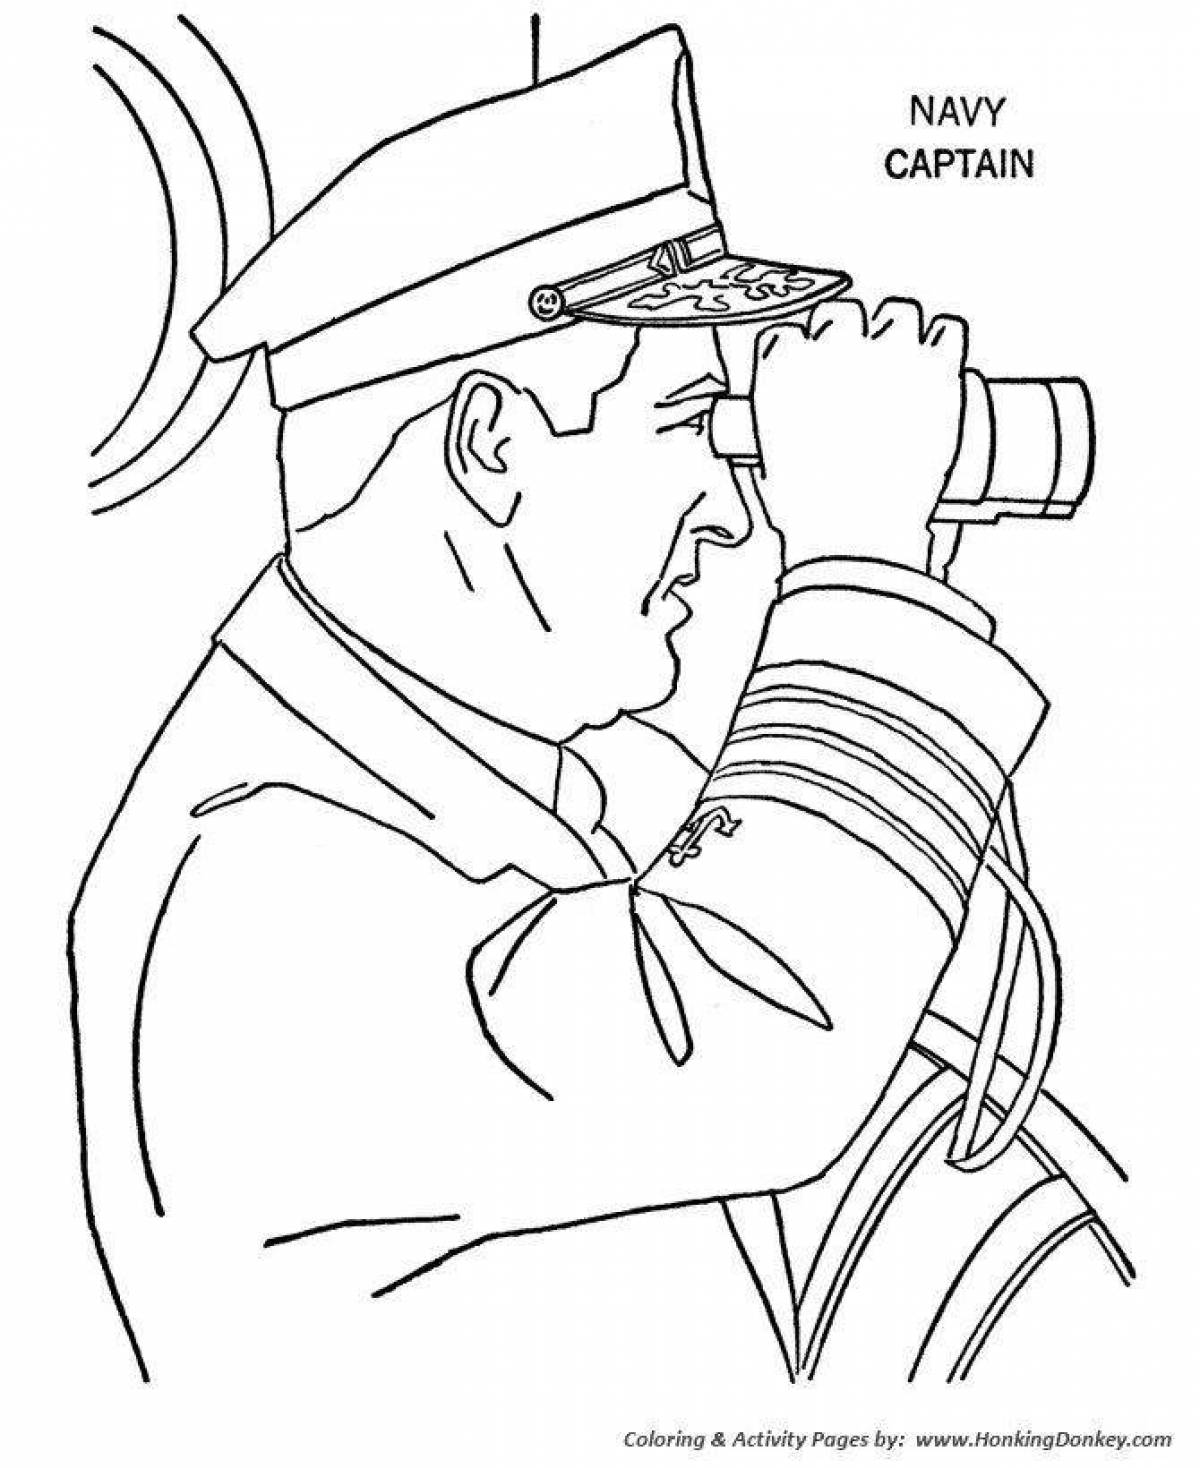 Impressive captain coloring page